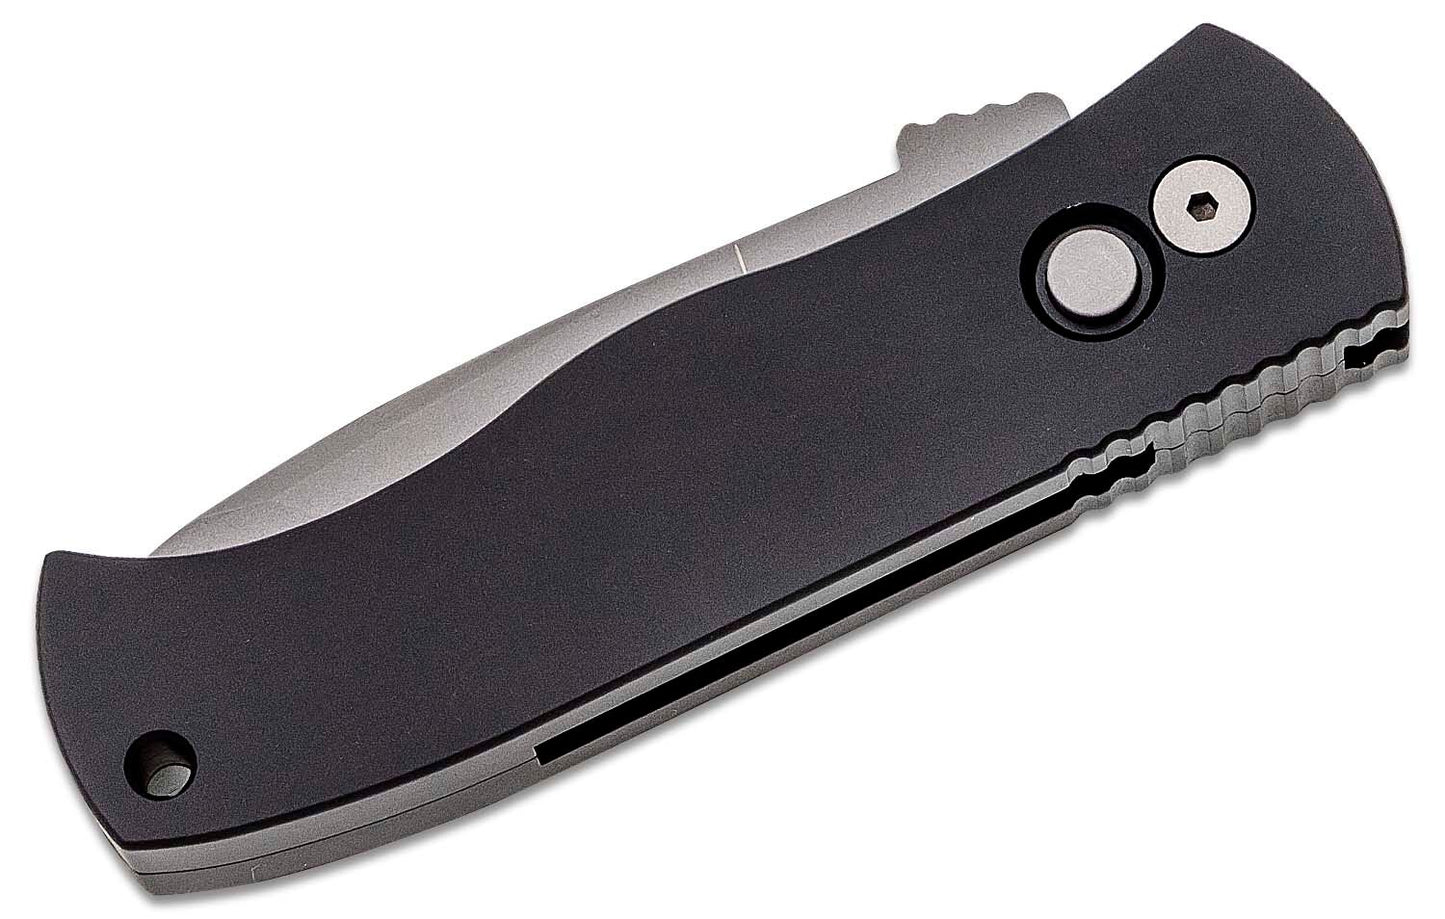 E7T01 Emerson CQC7 AUTO Folding Knife 3.25" 154CM Bead Blasted Plain Blade, Black Aluminum Handles